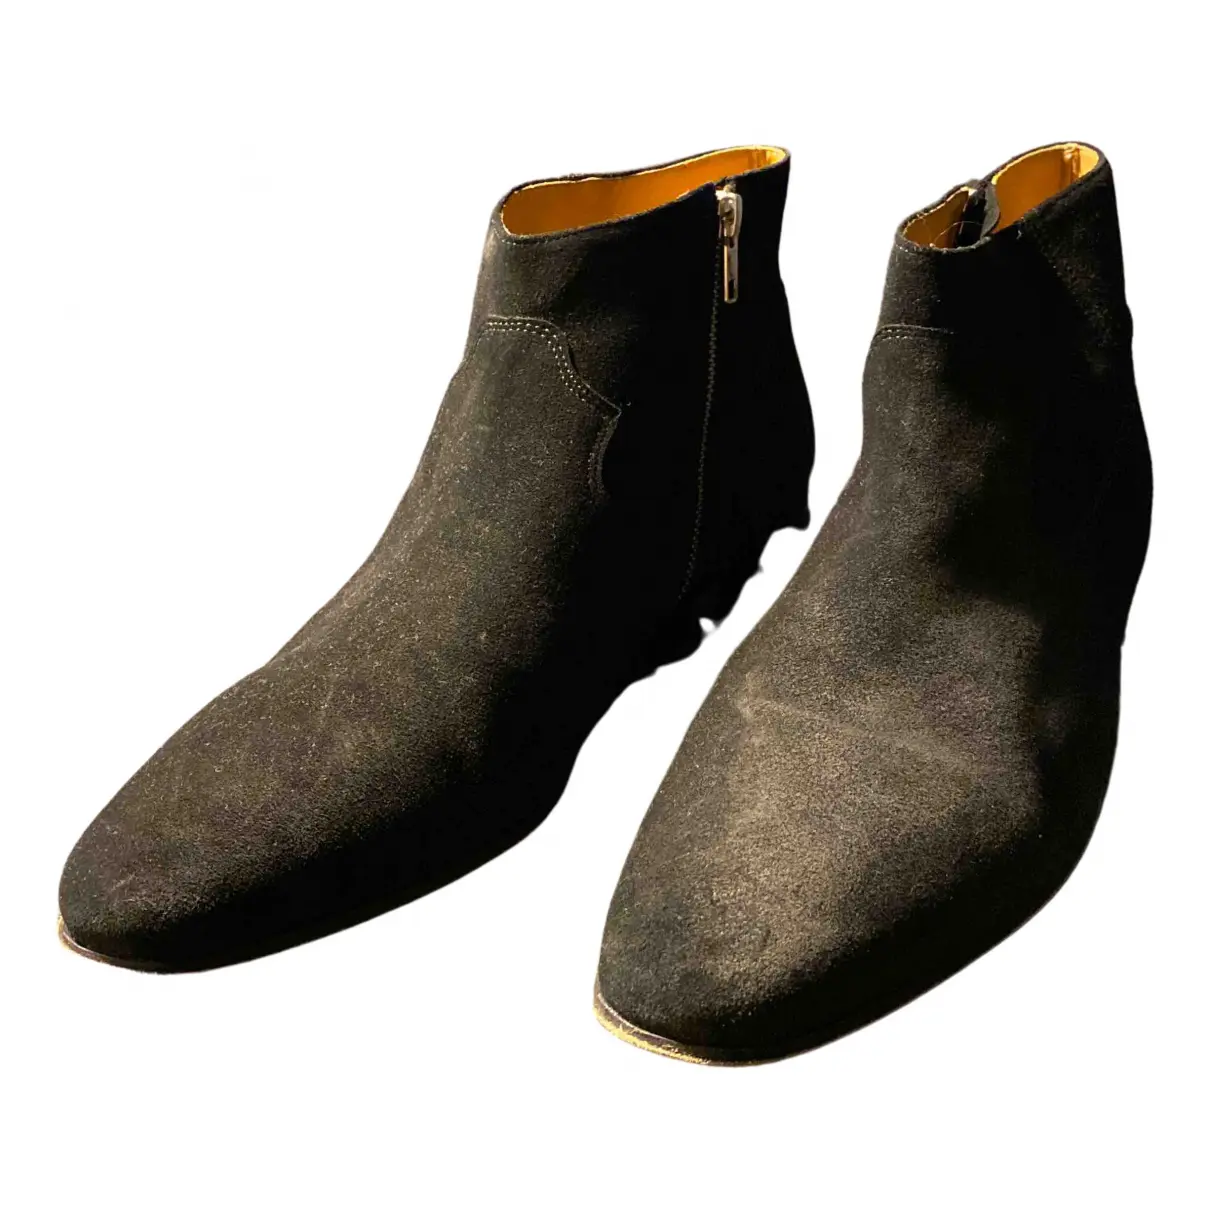 Leather boots Iro